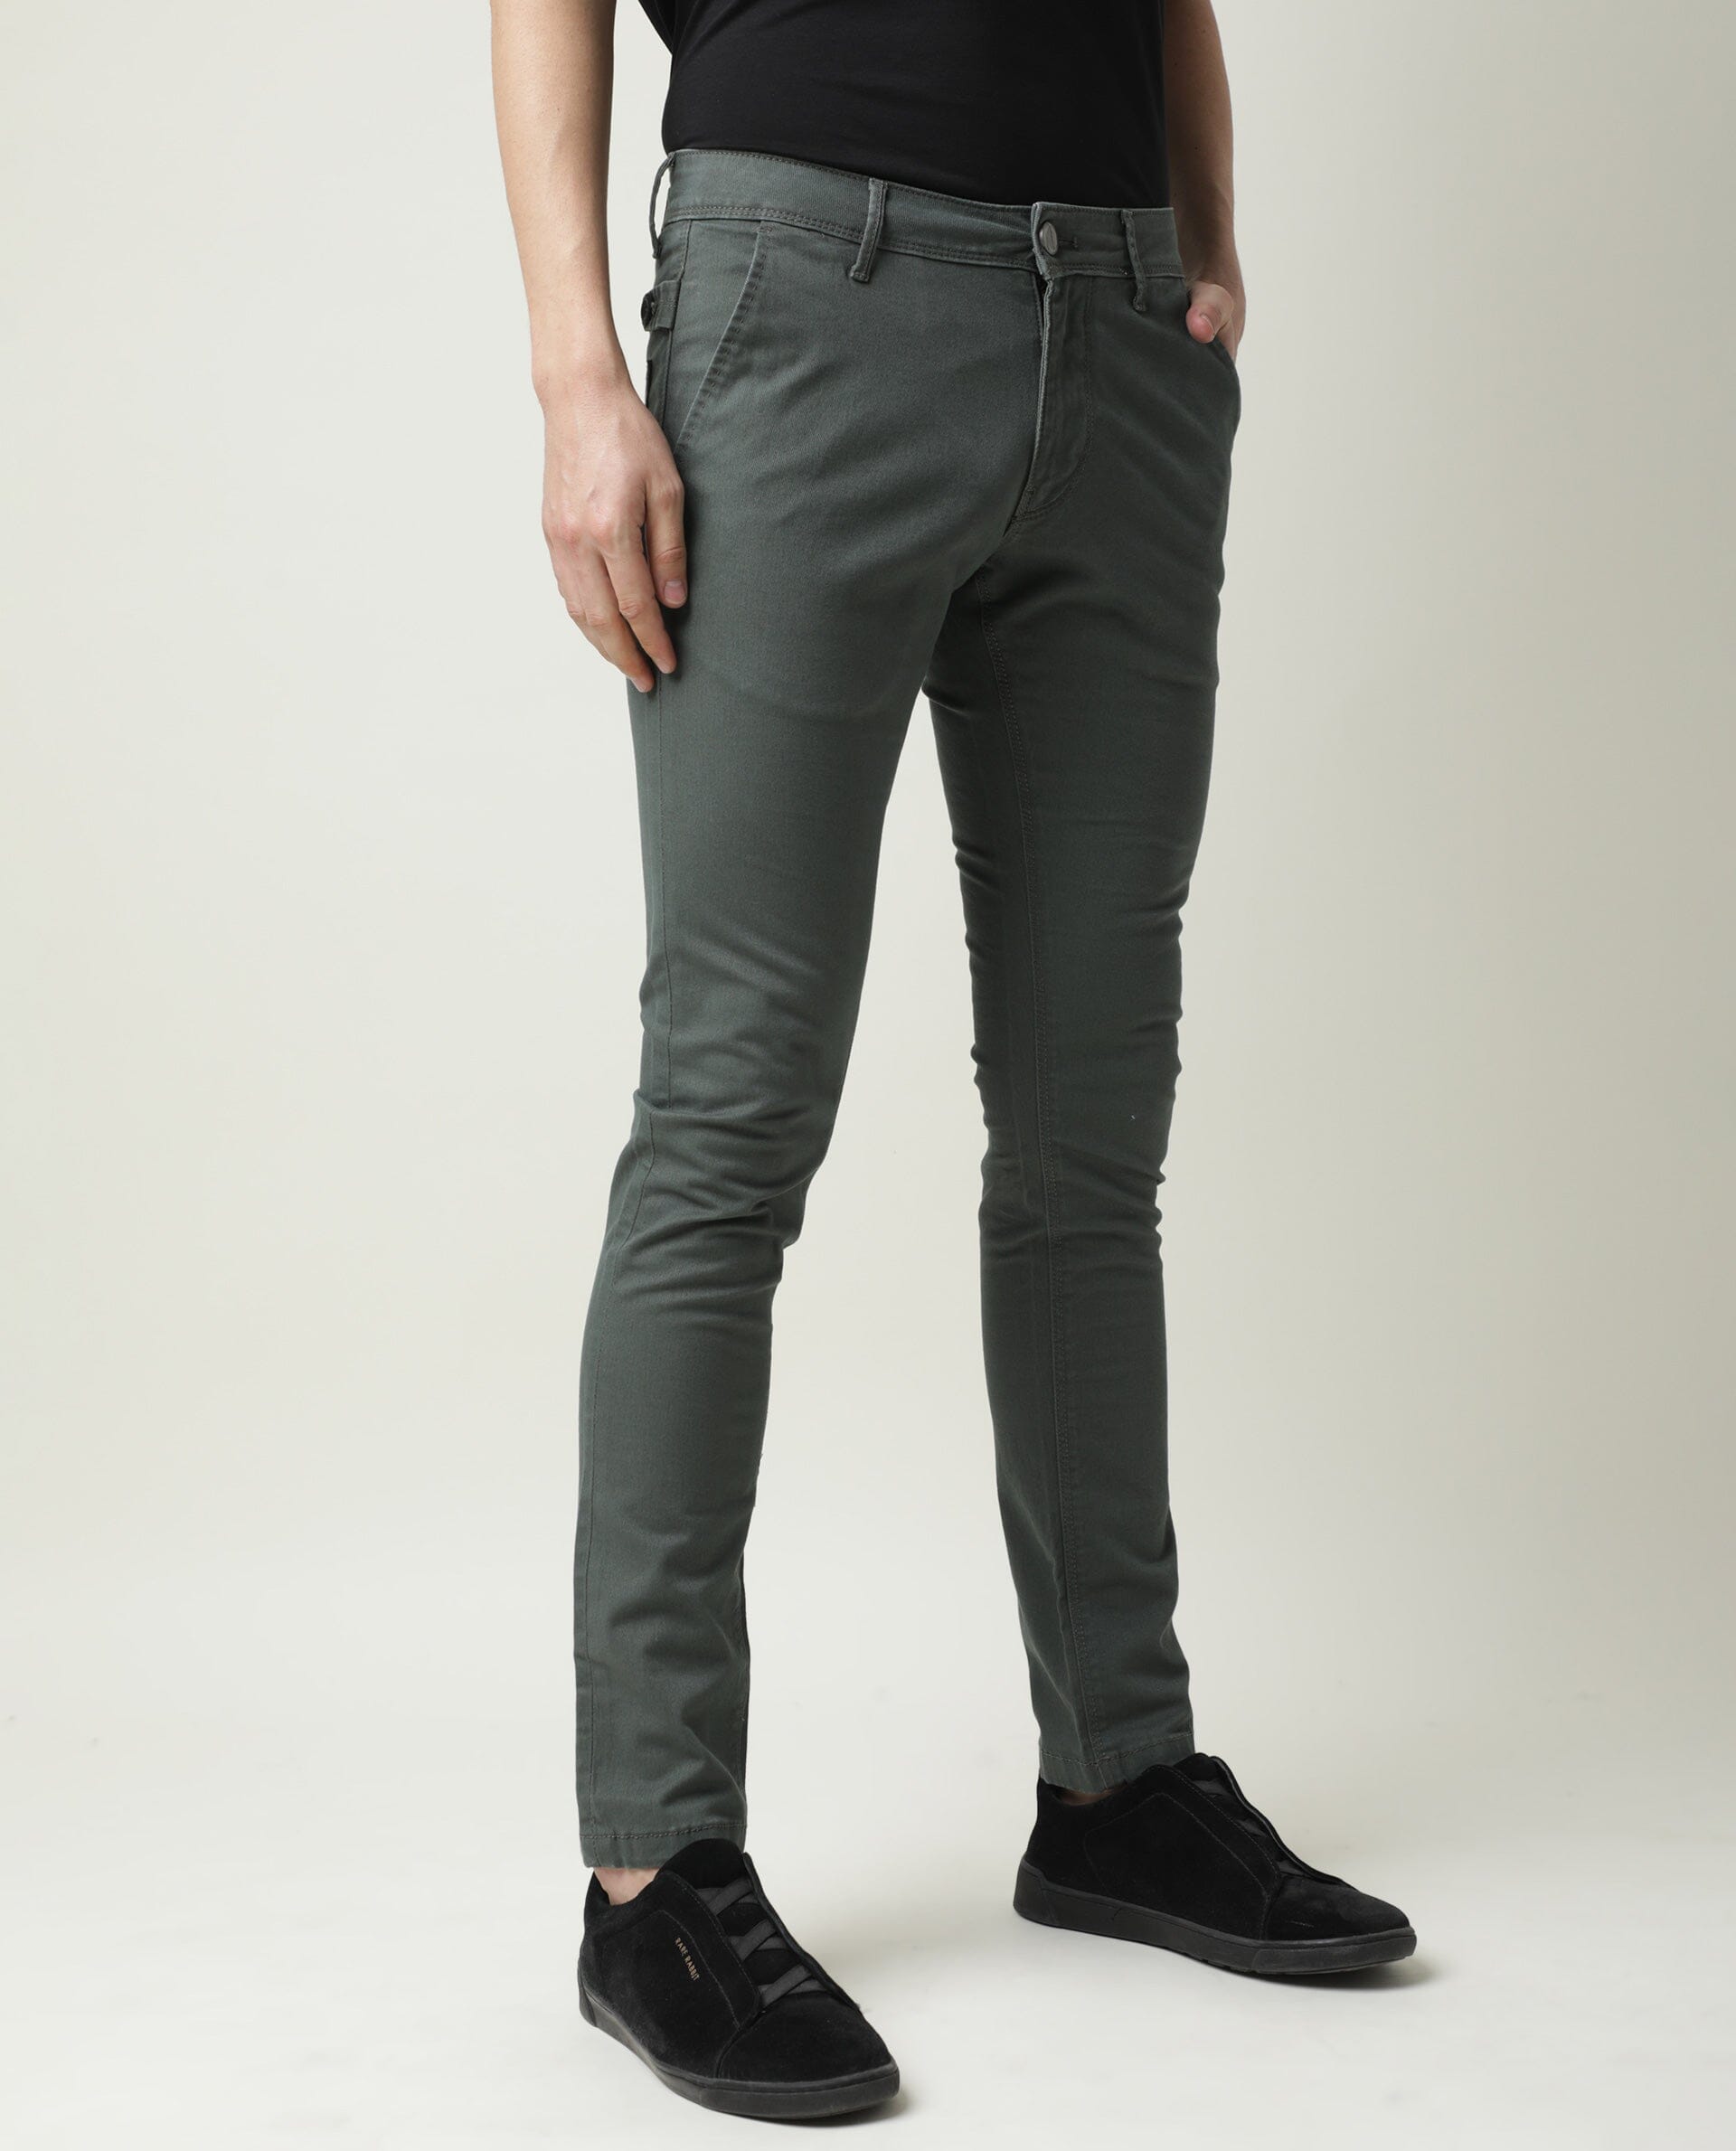 Shpwfbe Men's Jeans Fashion Plus-Size Loose Street Wide Leg Trousers Jeans  For Men Casual Pants - Walmart.com